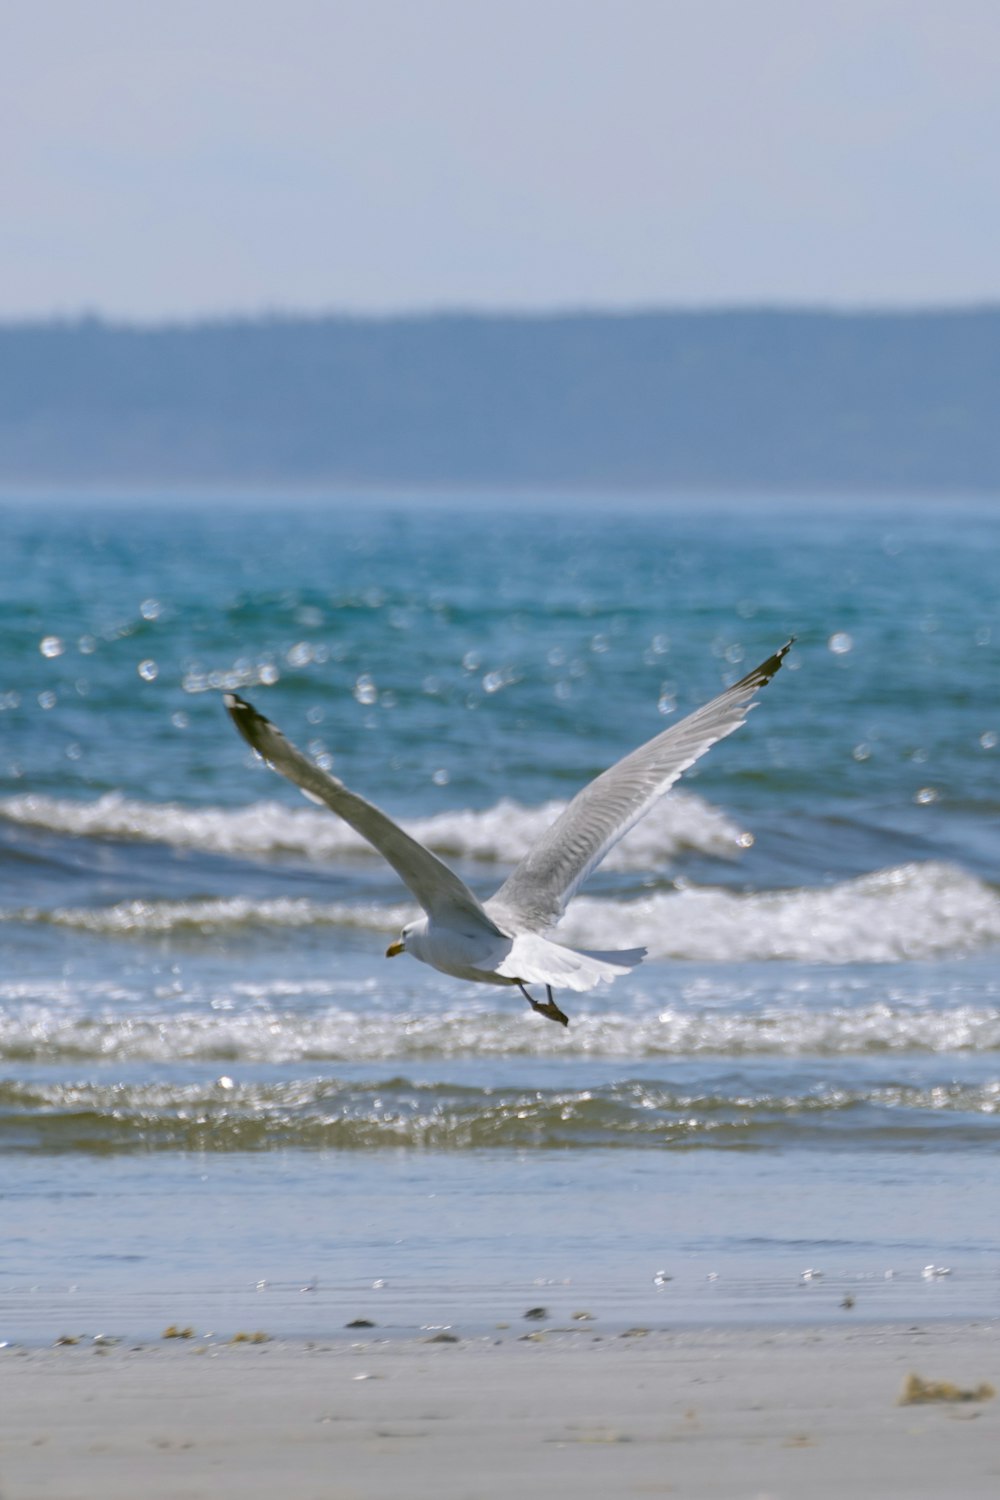 a seagull flying over the ocean on a beach